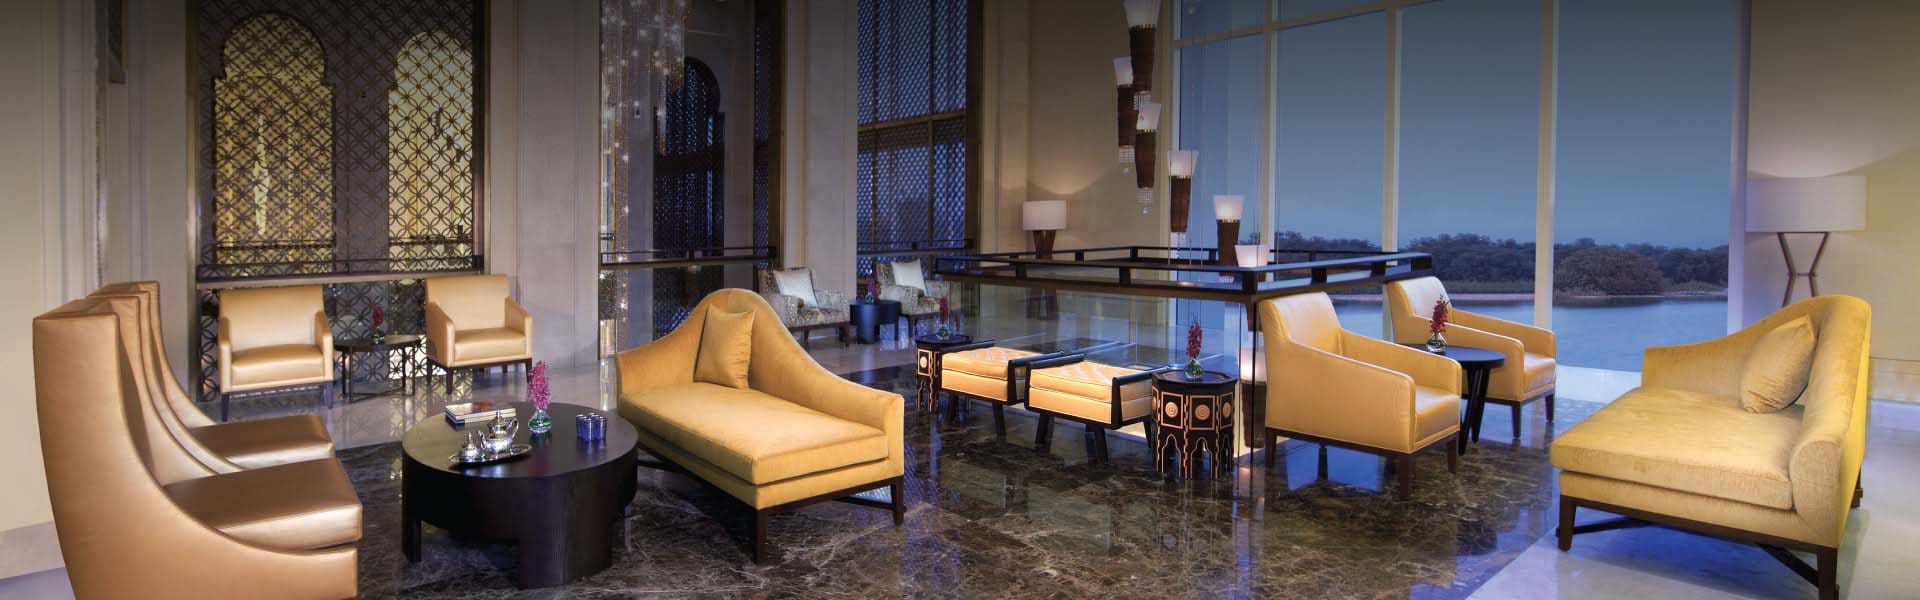 Anantara Eastern Mangroves Abu Dhabi Hotel Club Lounge Seating Area